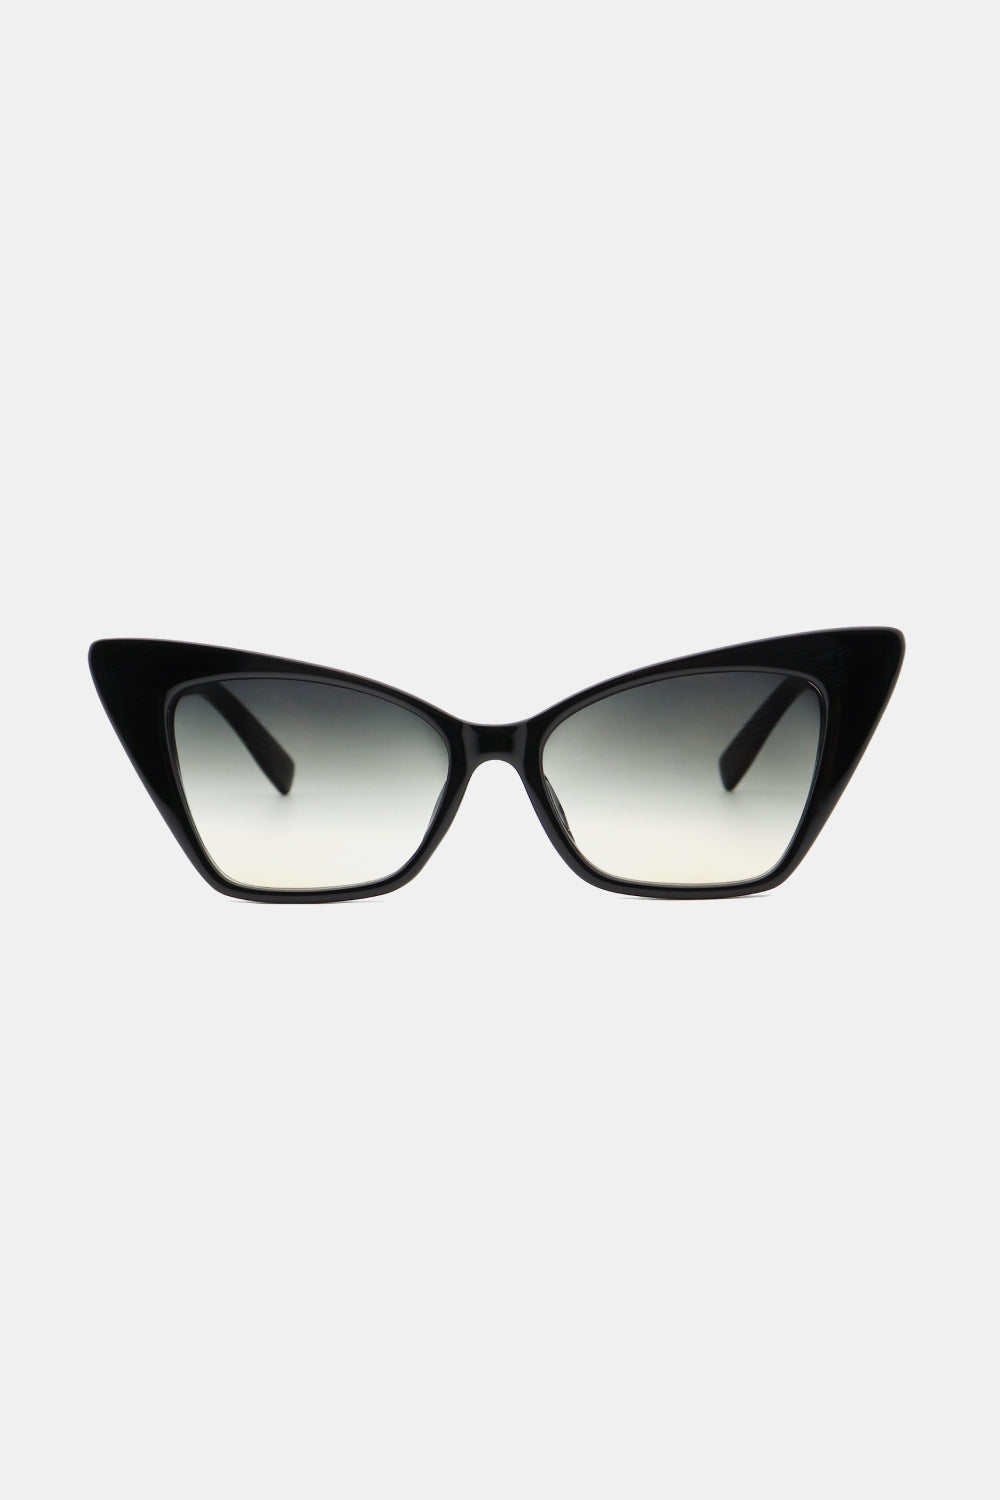 White Smoke Acetate Lens Cat Eye Sunglasses Clothing